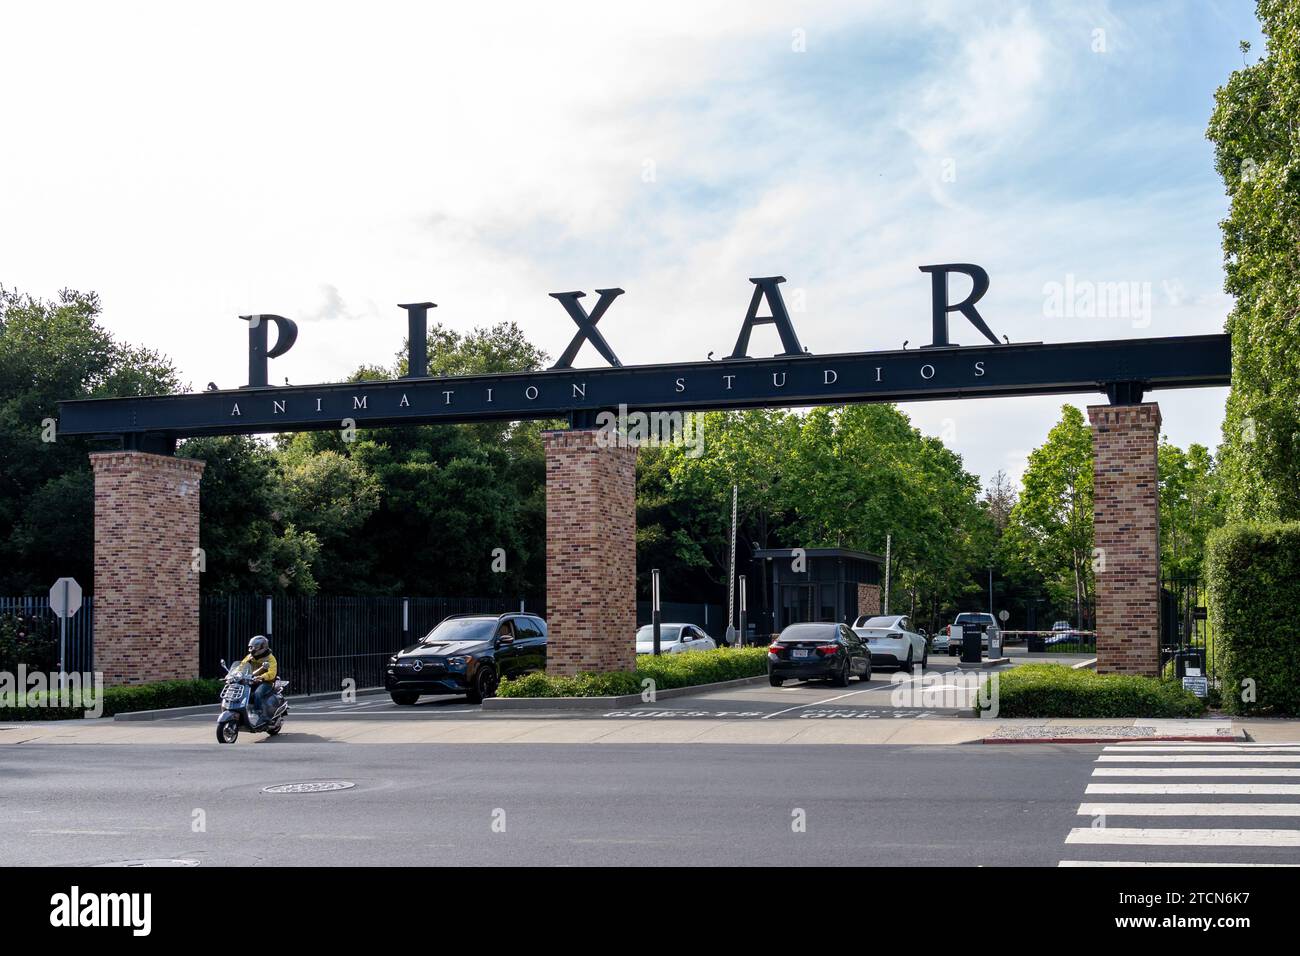 Pixar Animation Studios in Emeryville, CA, USA Stockfoto